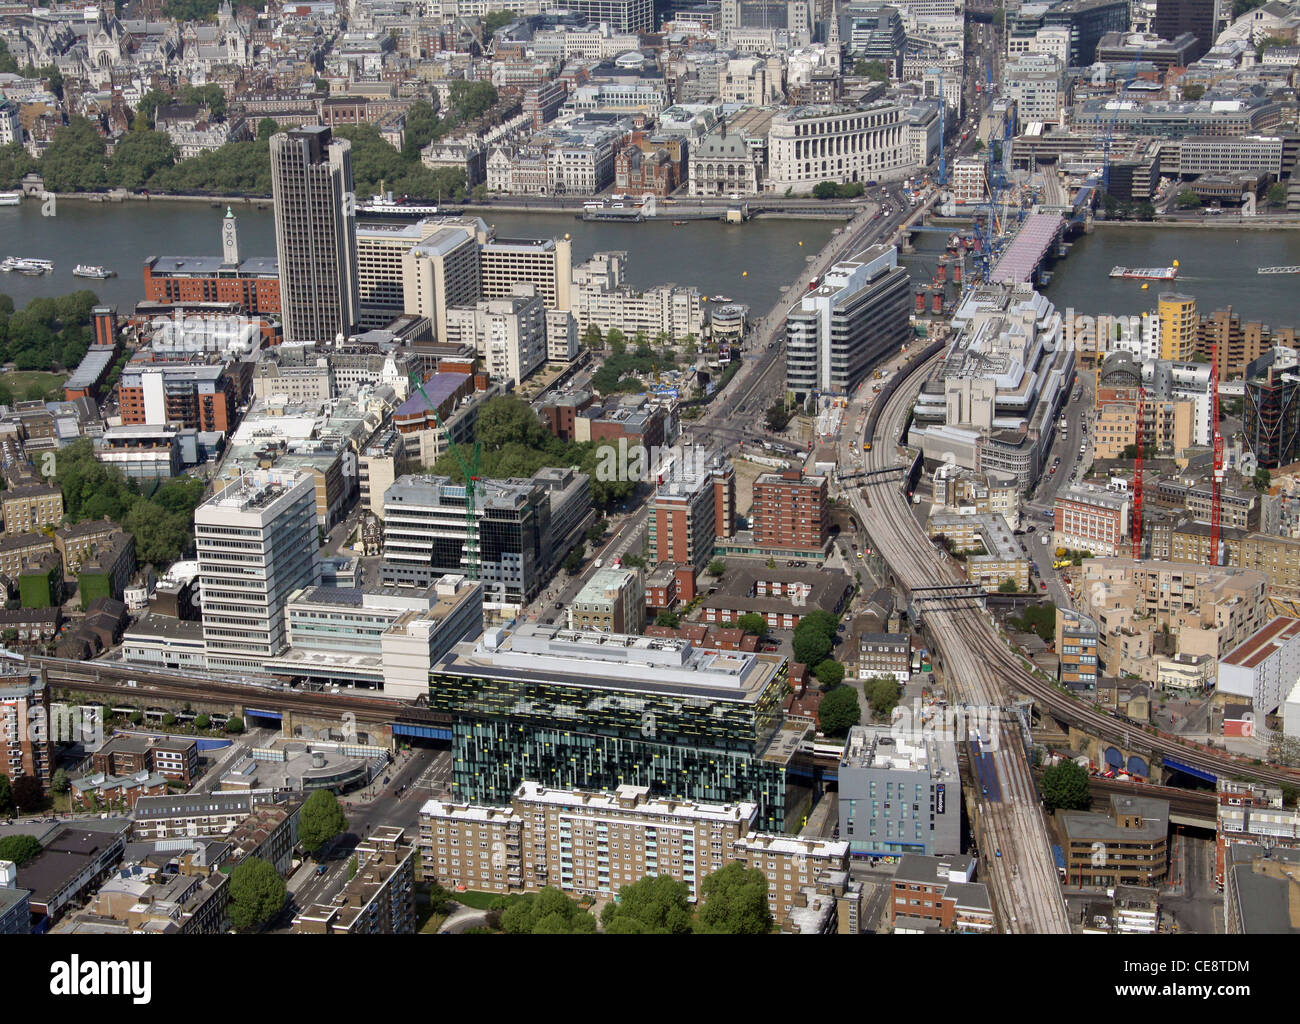 Aerial image of Southwark, with Blackfriars Road & Blackfriars Bridge, London SE1 Stock Photo